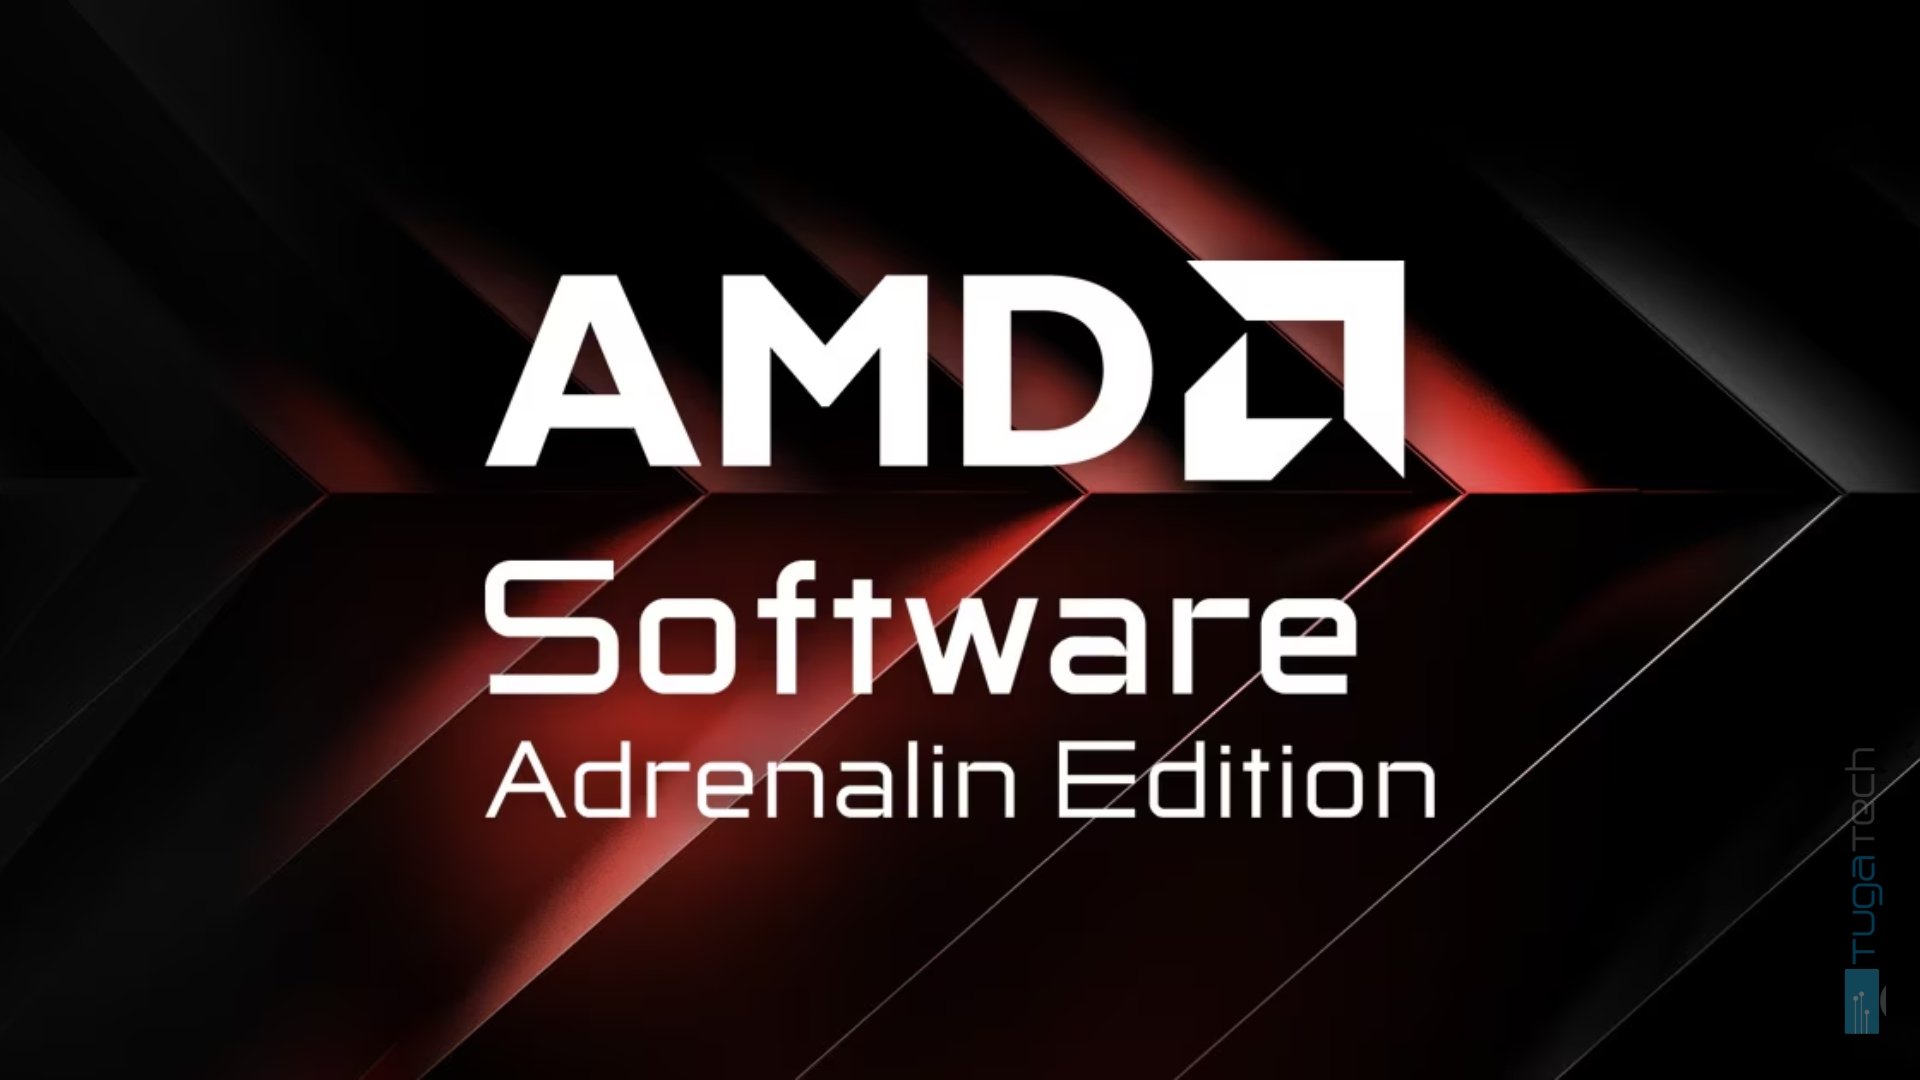 AMD Radeon software